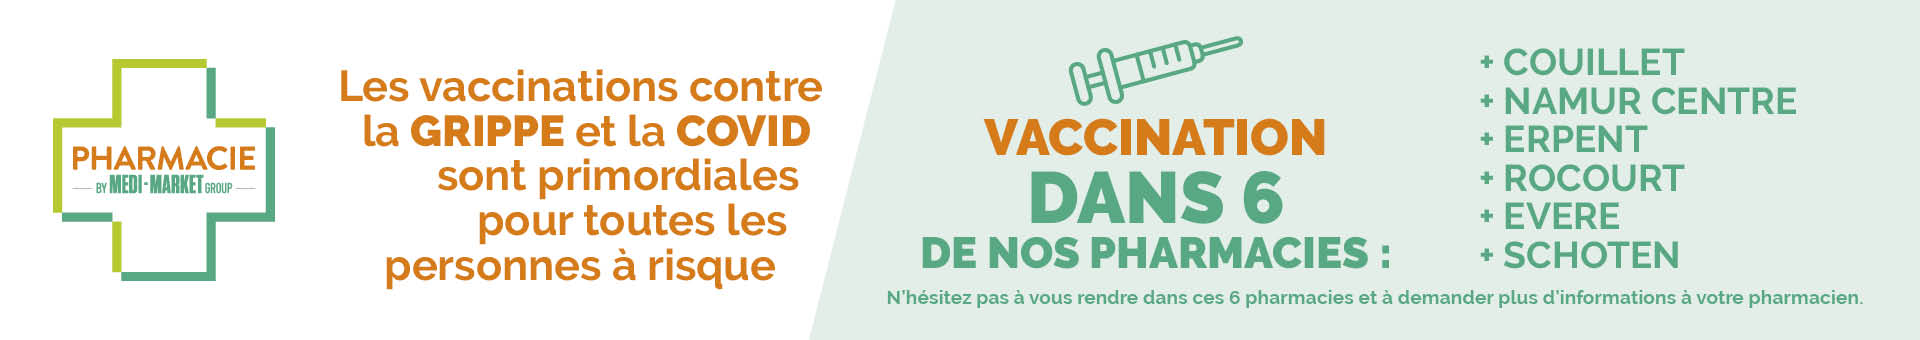 Bannière web_vaccin grippe_385x613_FR_V1.jpg